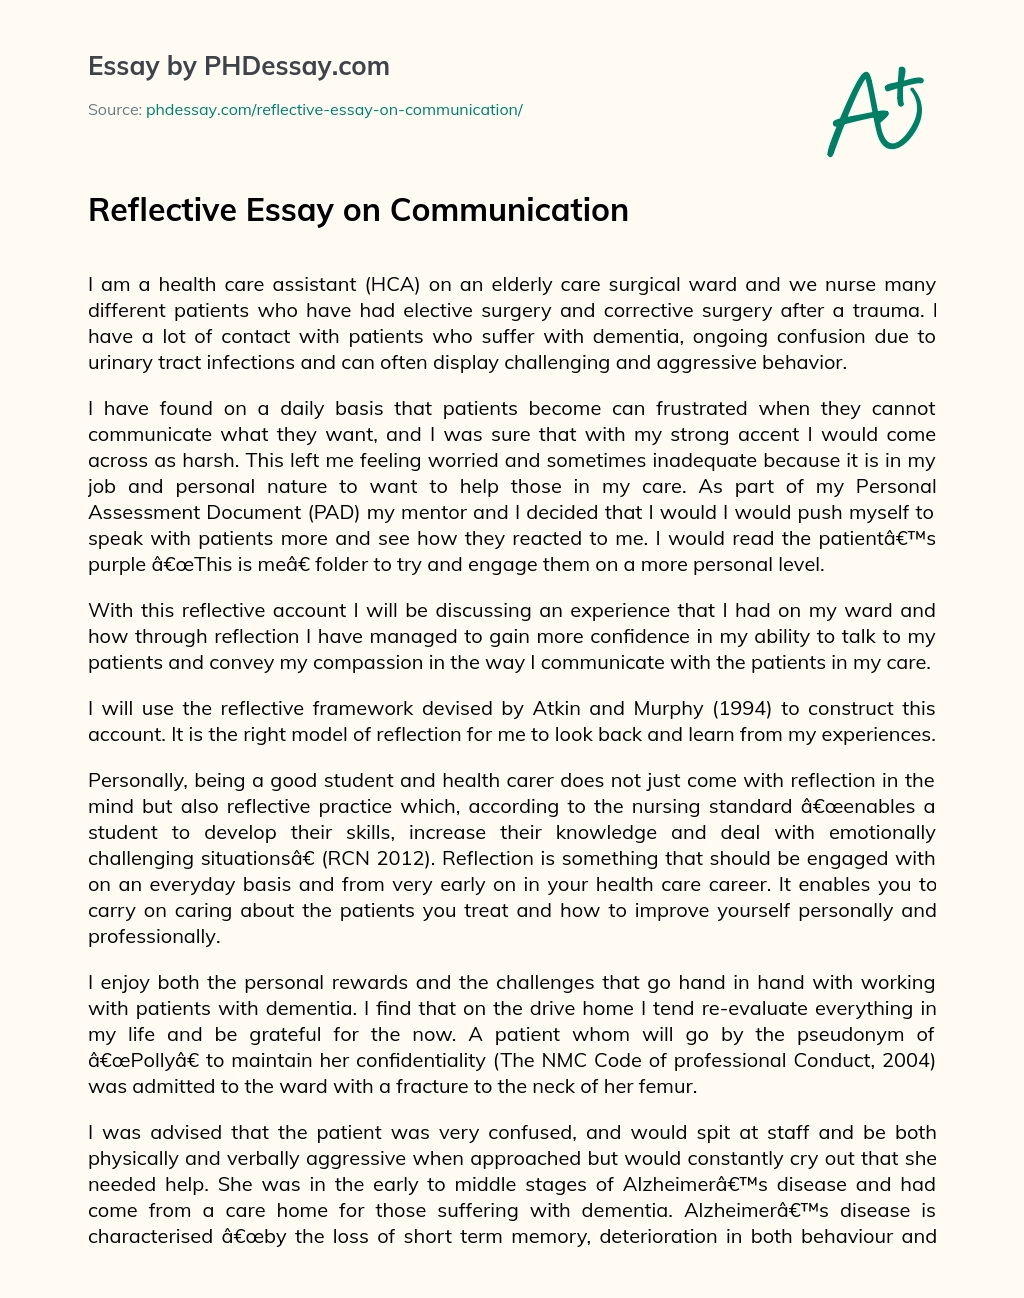 Reflective Essay on Communication essay